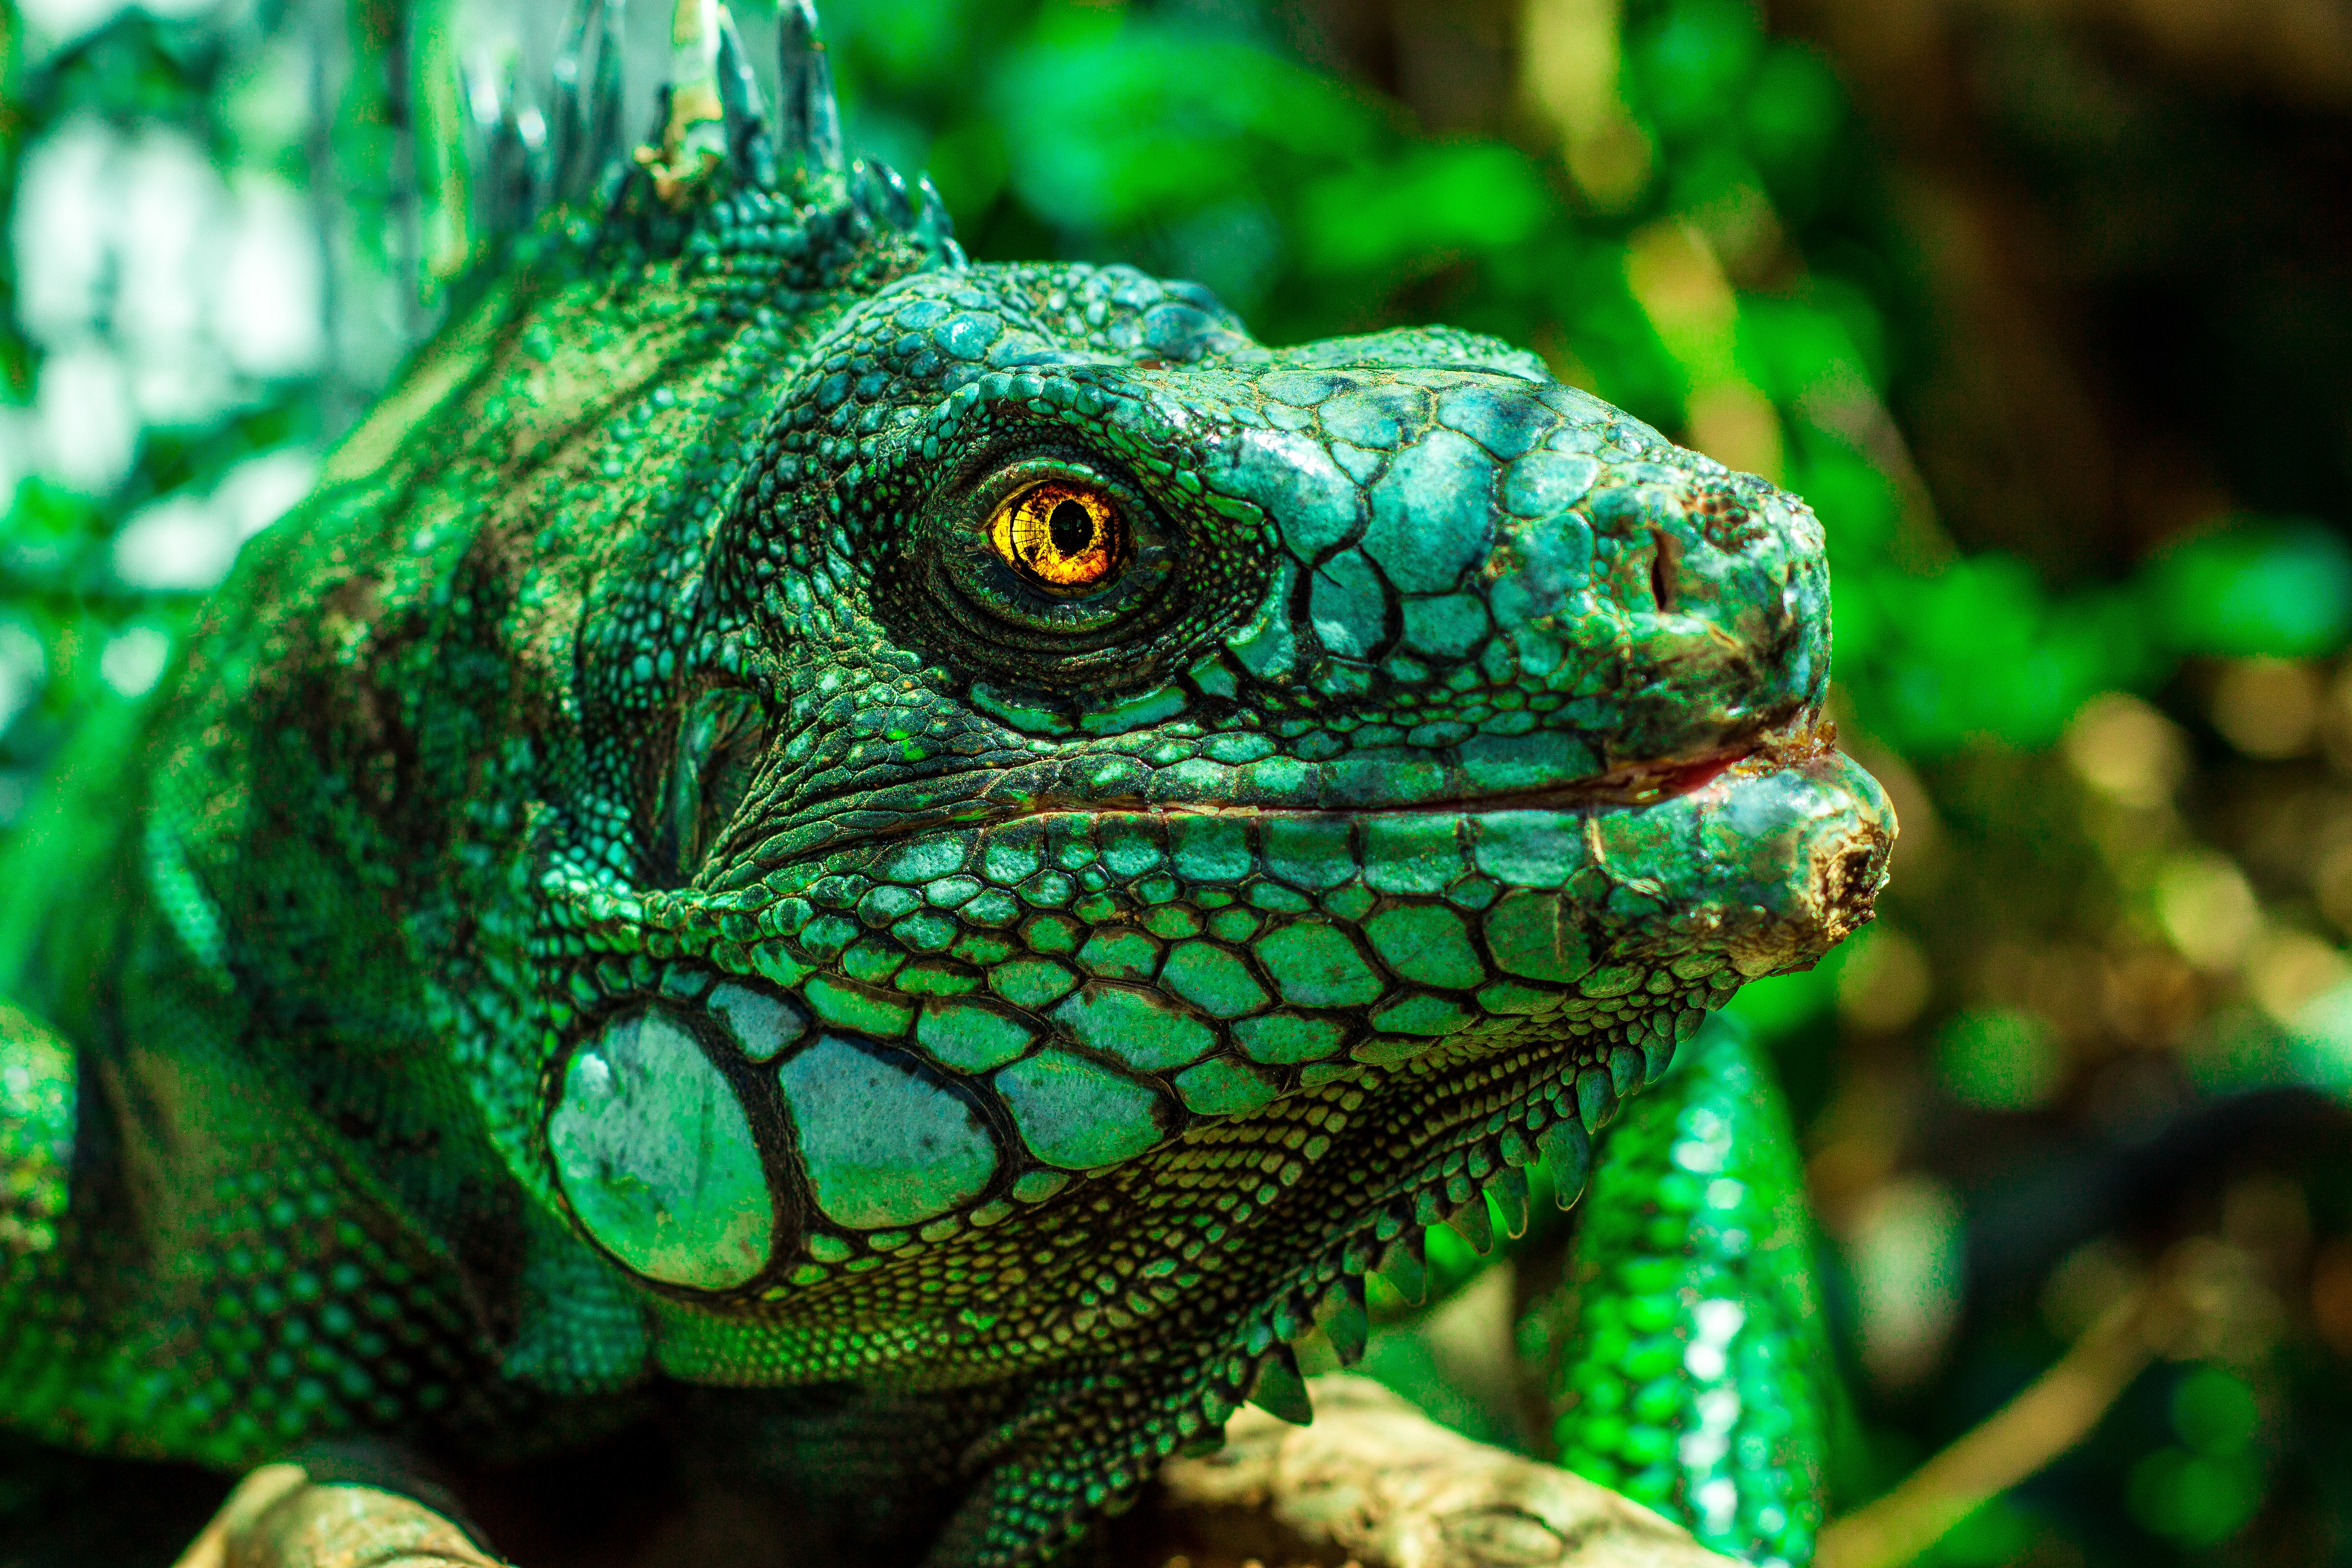 File:Green Iguana iguana head.jpg - Wikimedia Commons